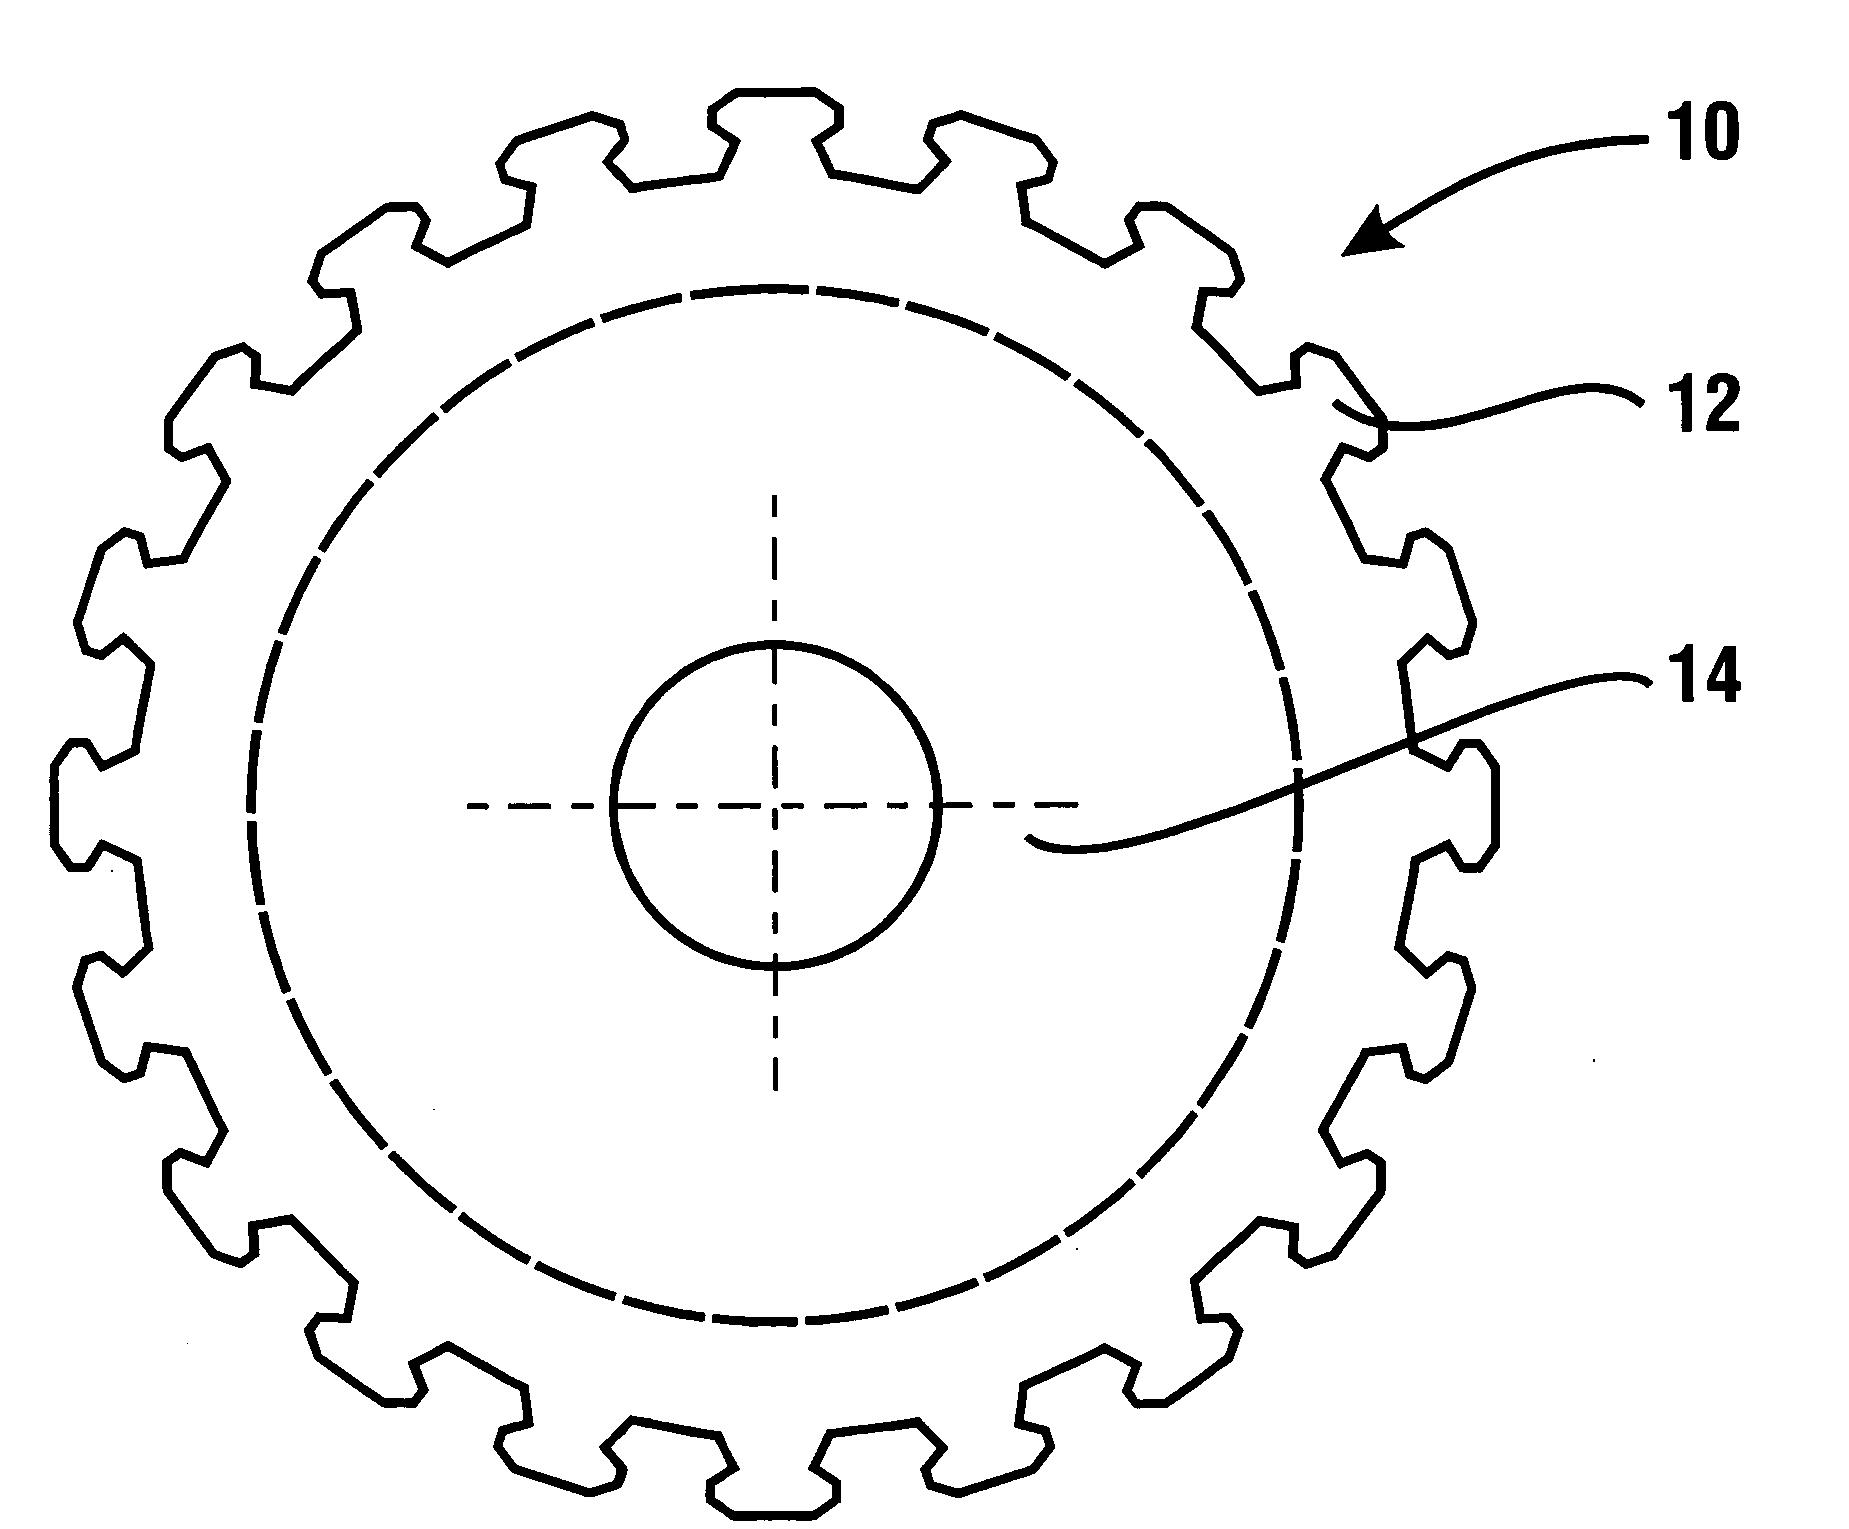 Nickel base superalloy turbine disk